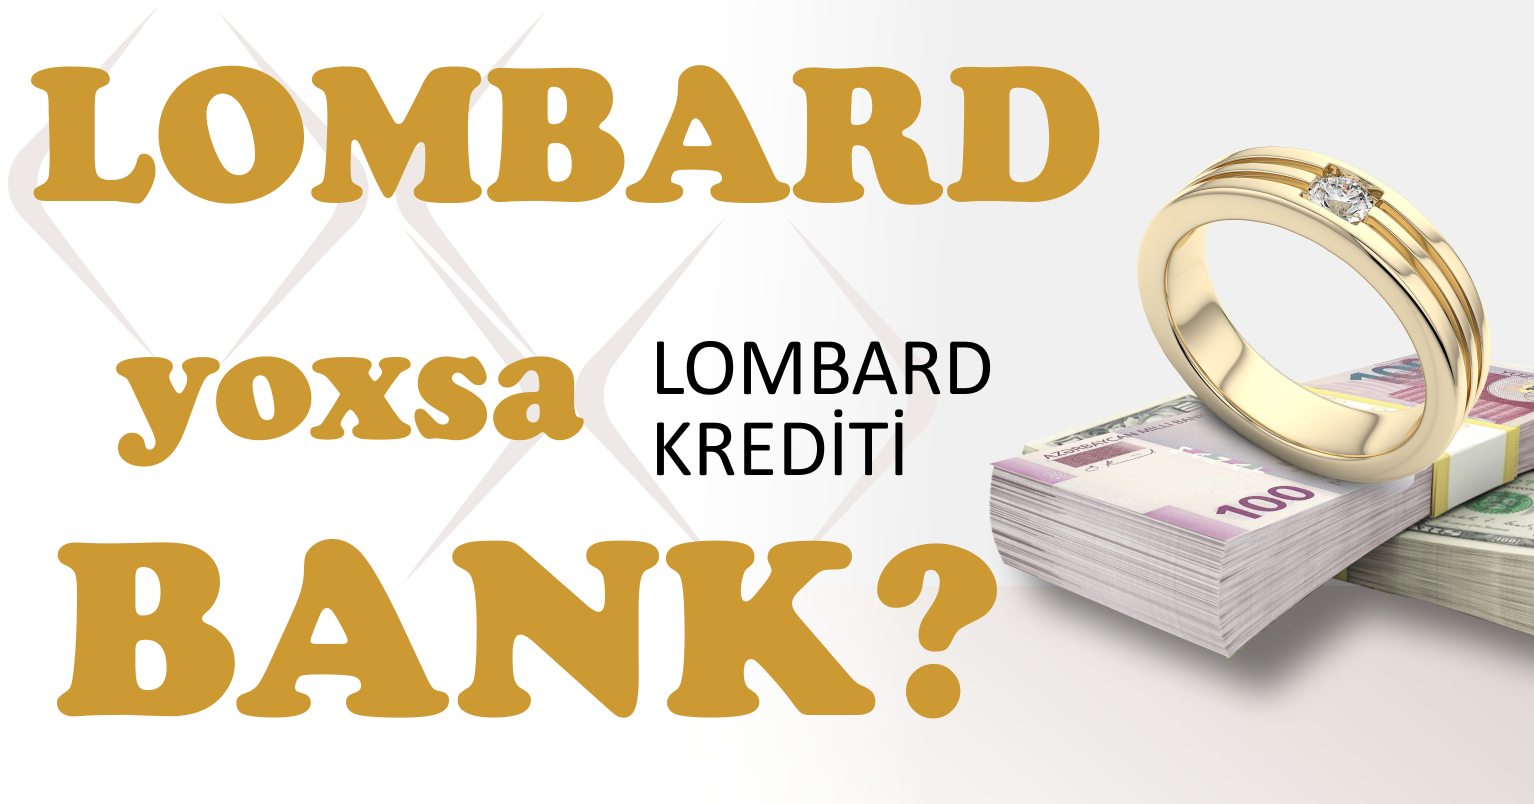 Lombard yoxsa Bank krediti? – I Yazı